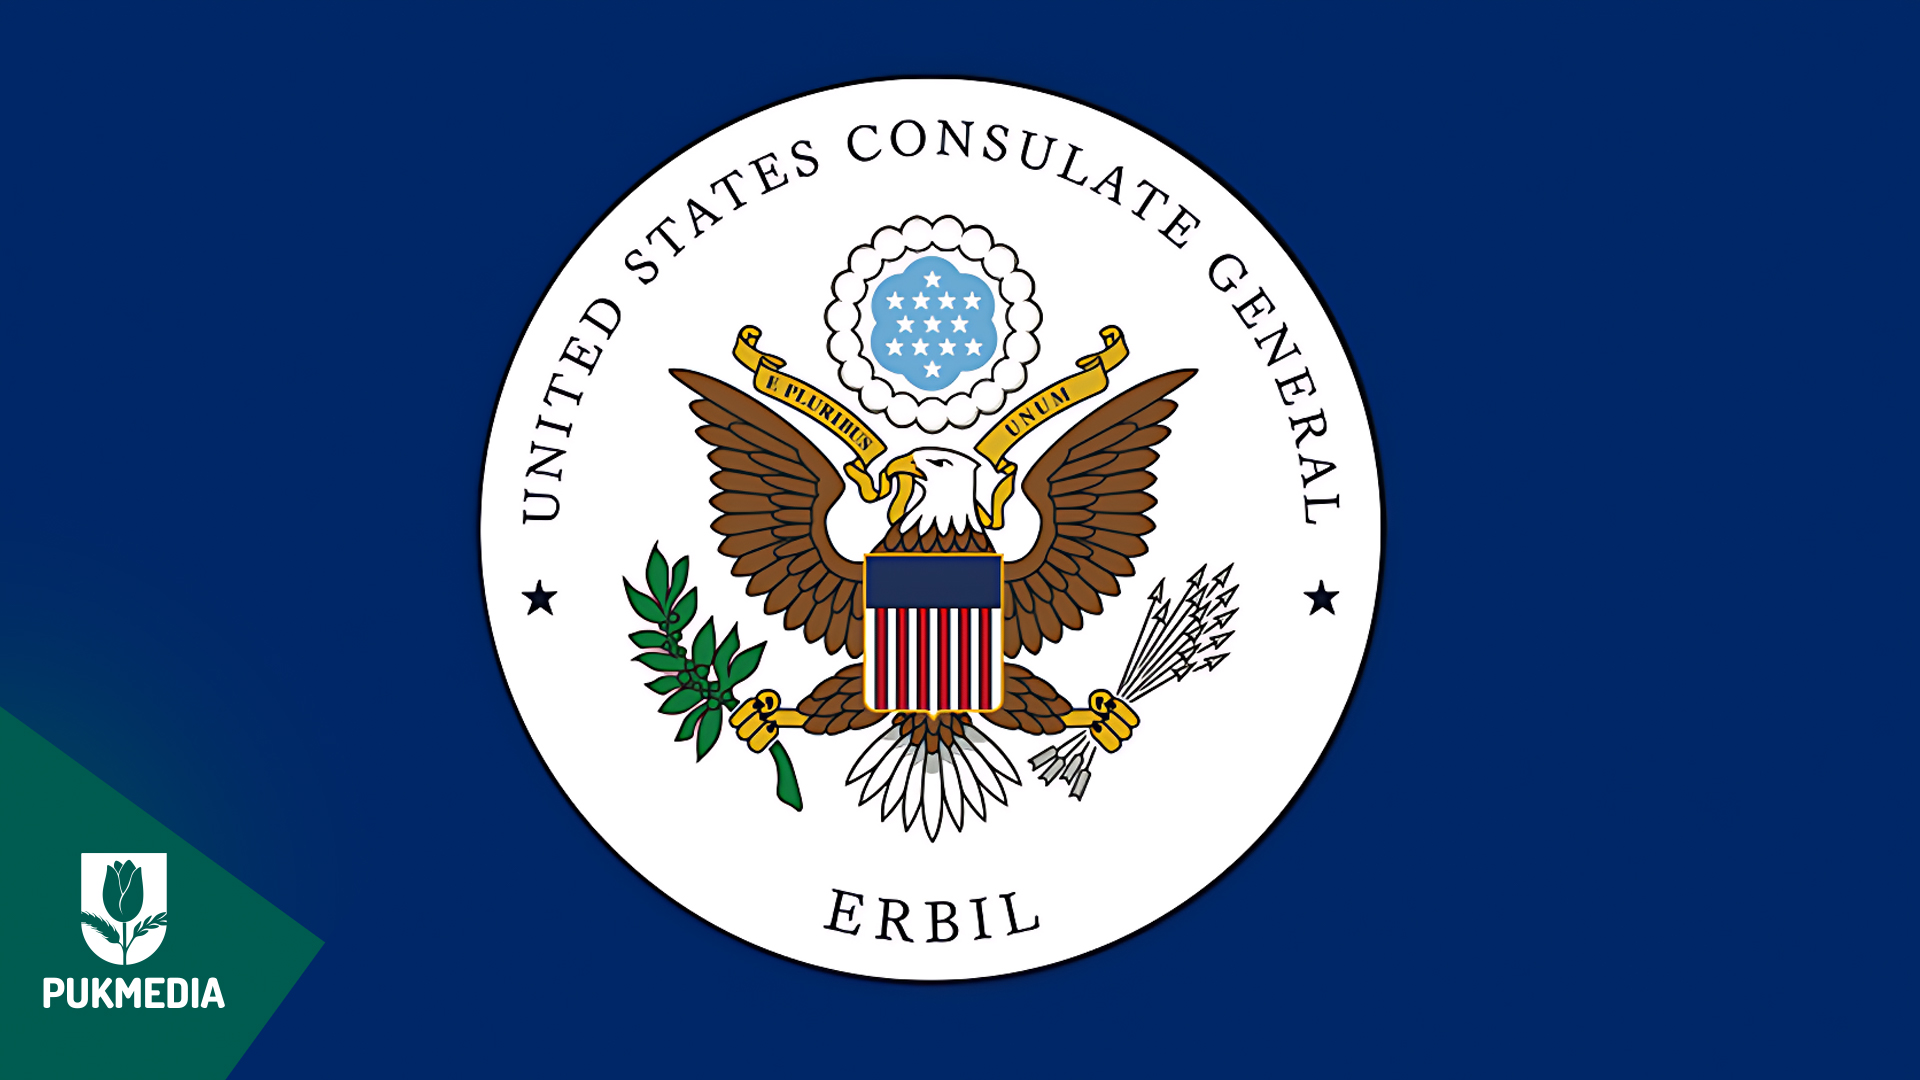 The US Consulate General in Erbil logo.